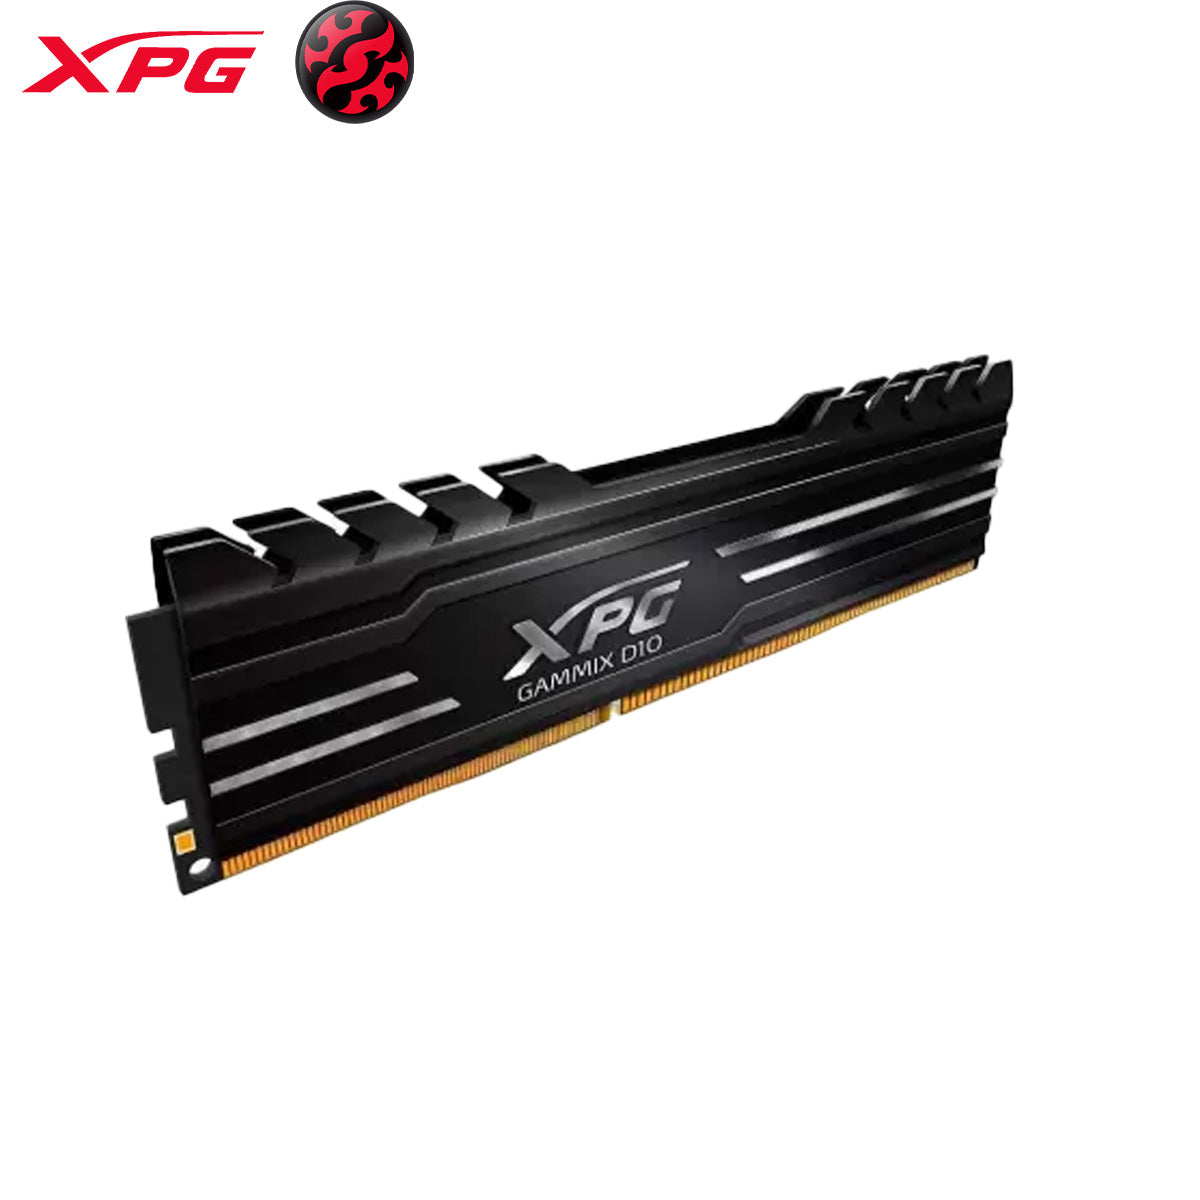 ADATA XPG GAMMIX D10 DDR4 4GB 2666MHZ Gaming Memory Module